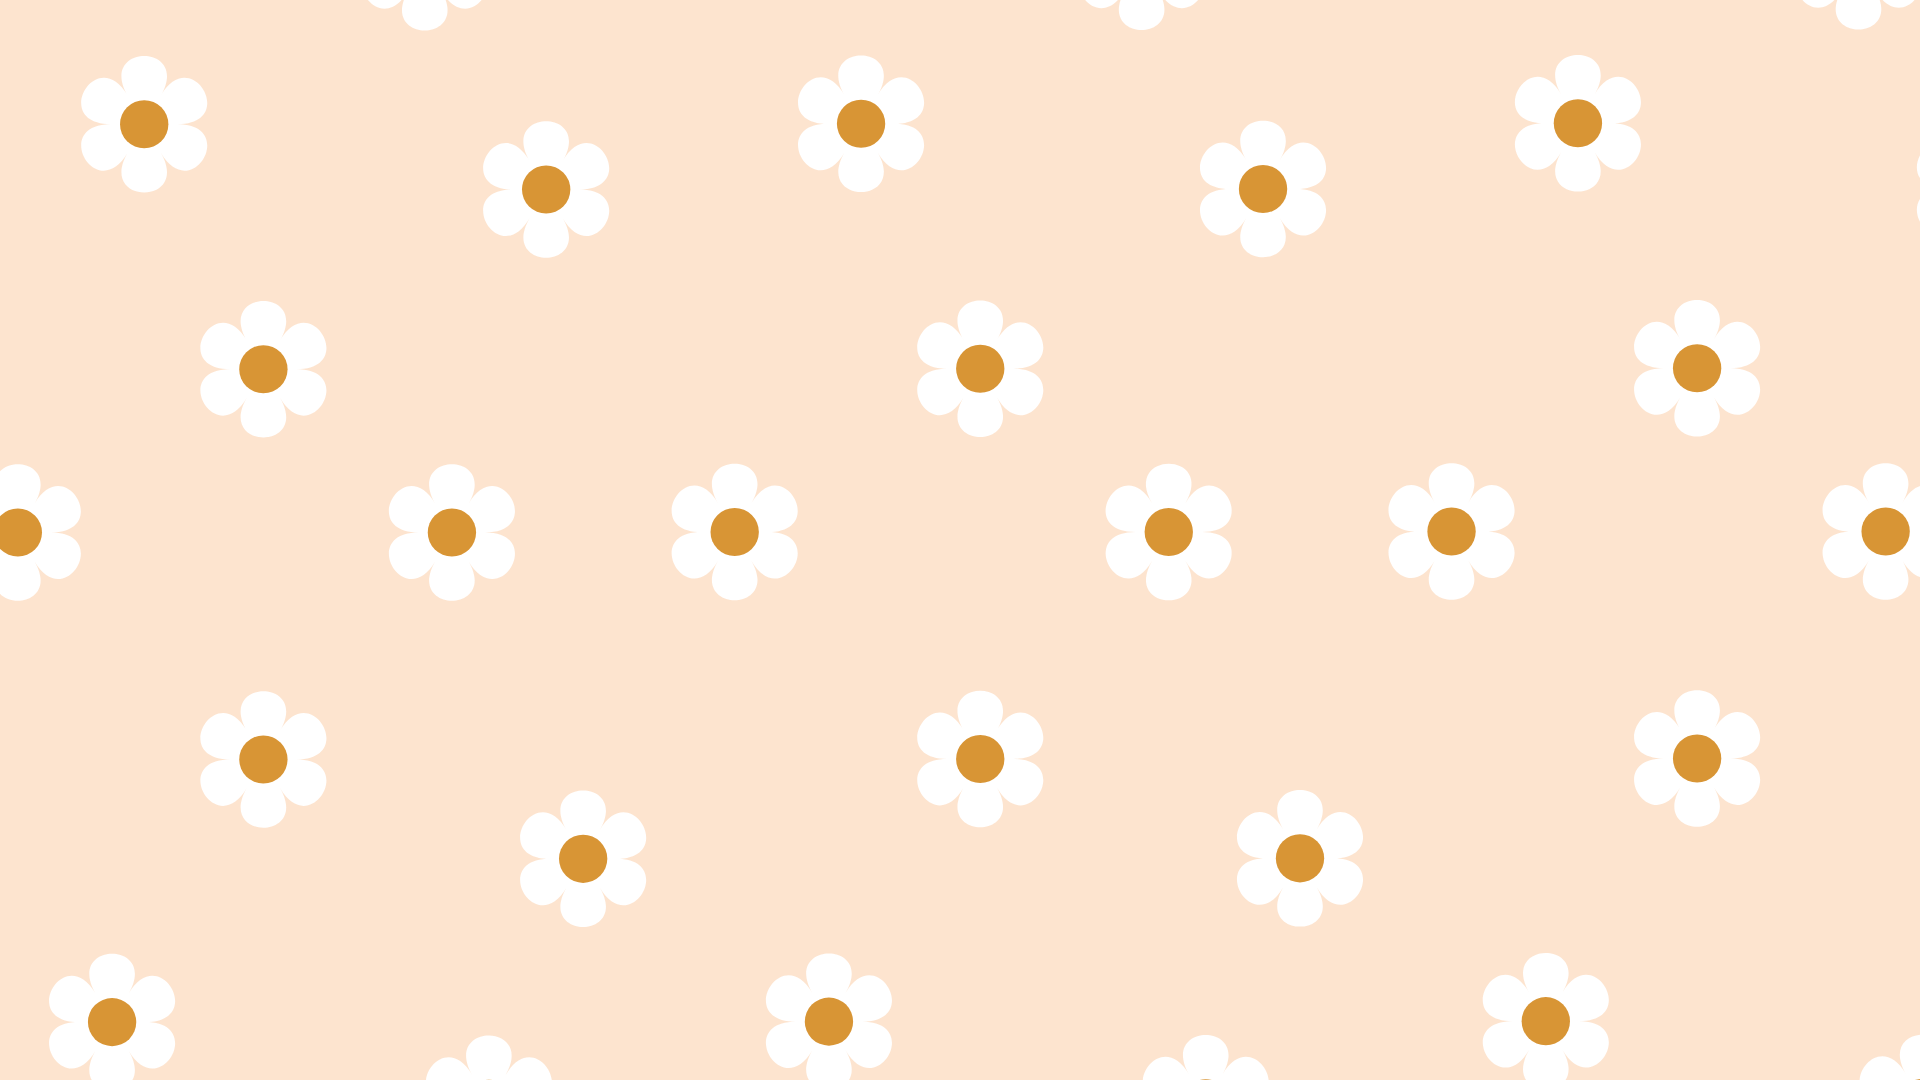 A pattern of flowers on an orange background - Preppy